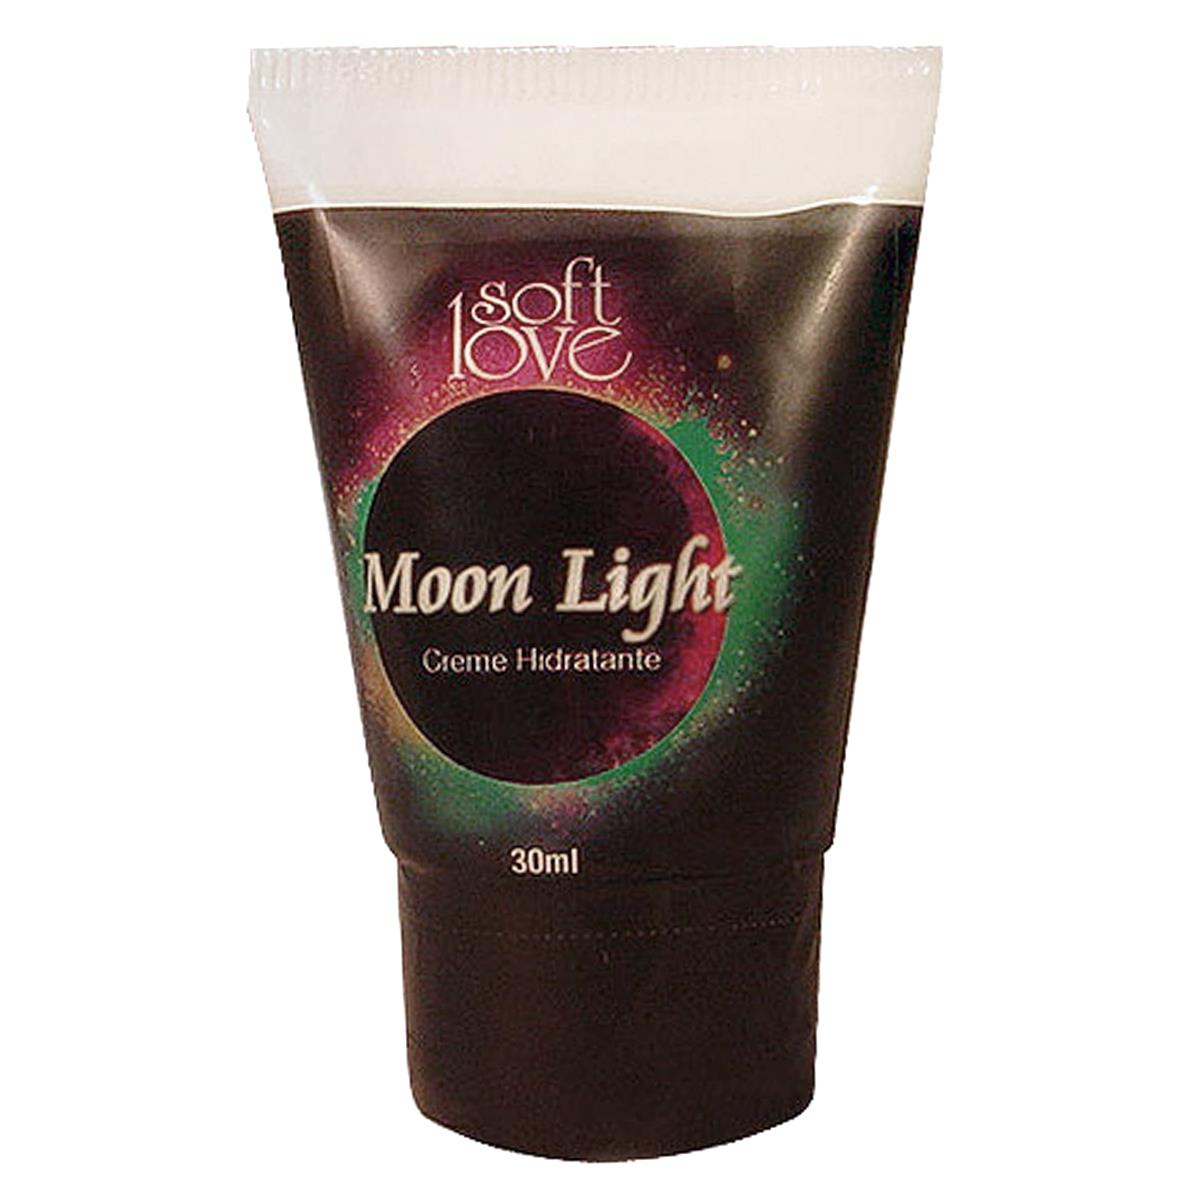 Moon Light Creme Hidratante 30ml Soft Love - Miess